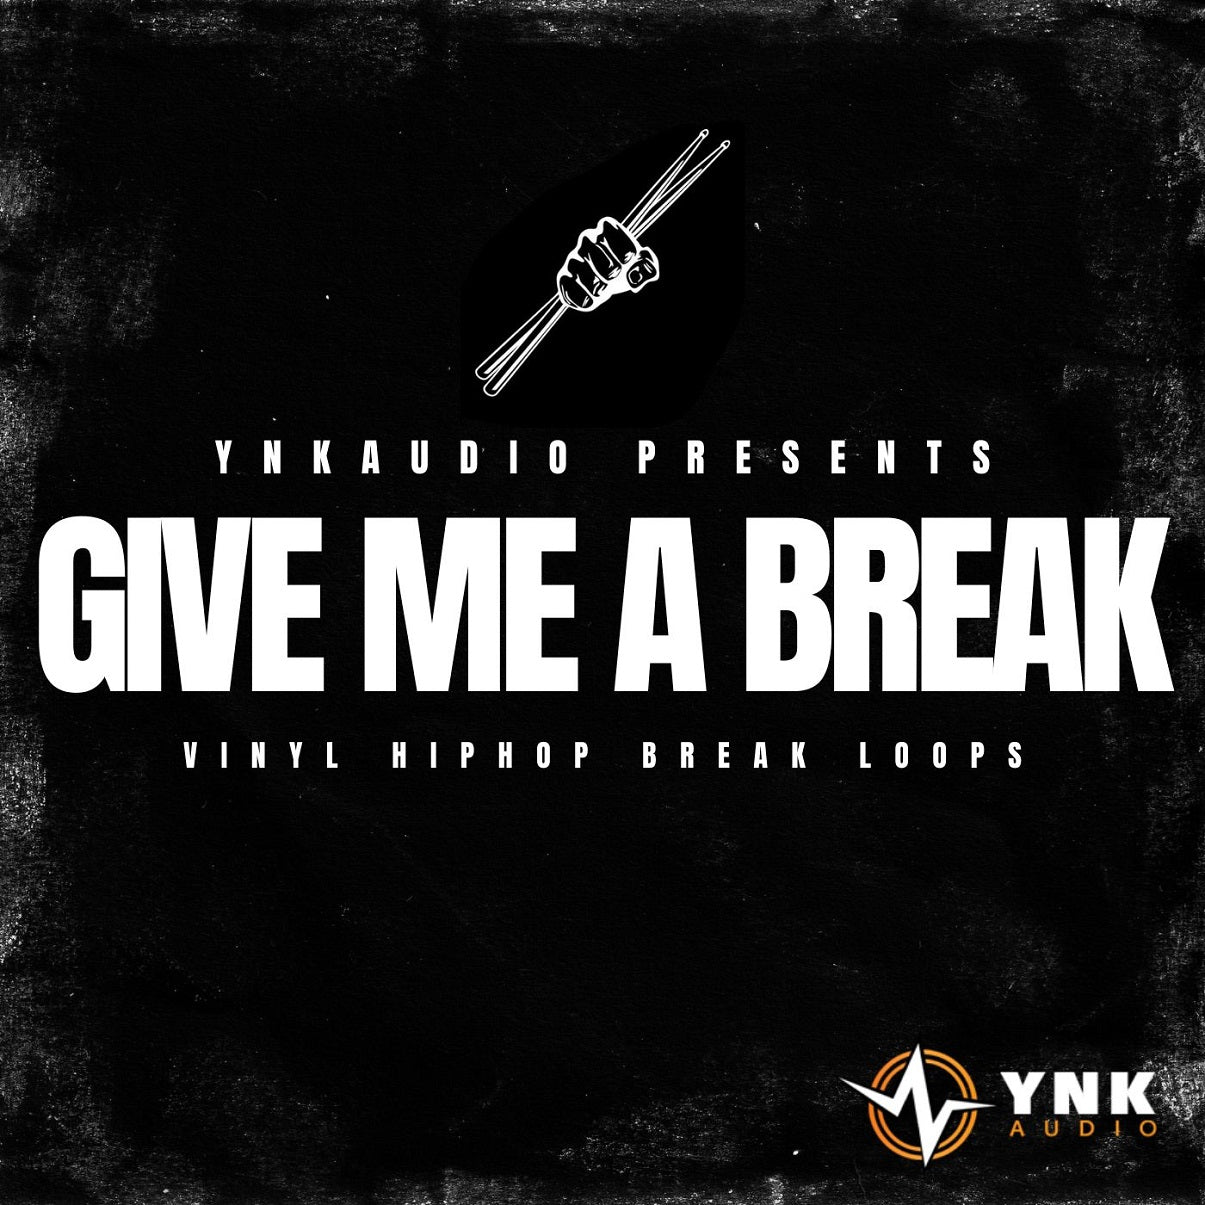 Give Me A Break: Vinyl Hip-Hop Break Loops - YnK Audio - Scraps Audio